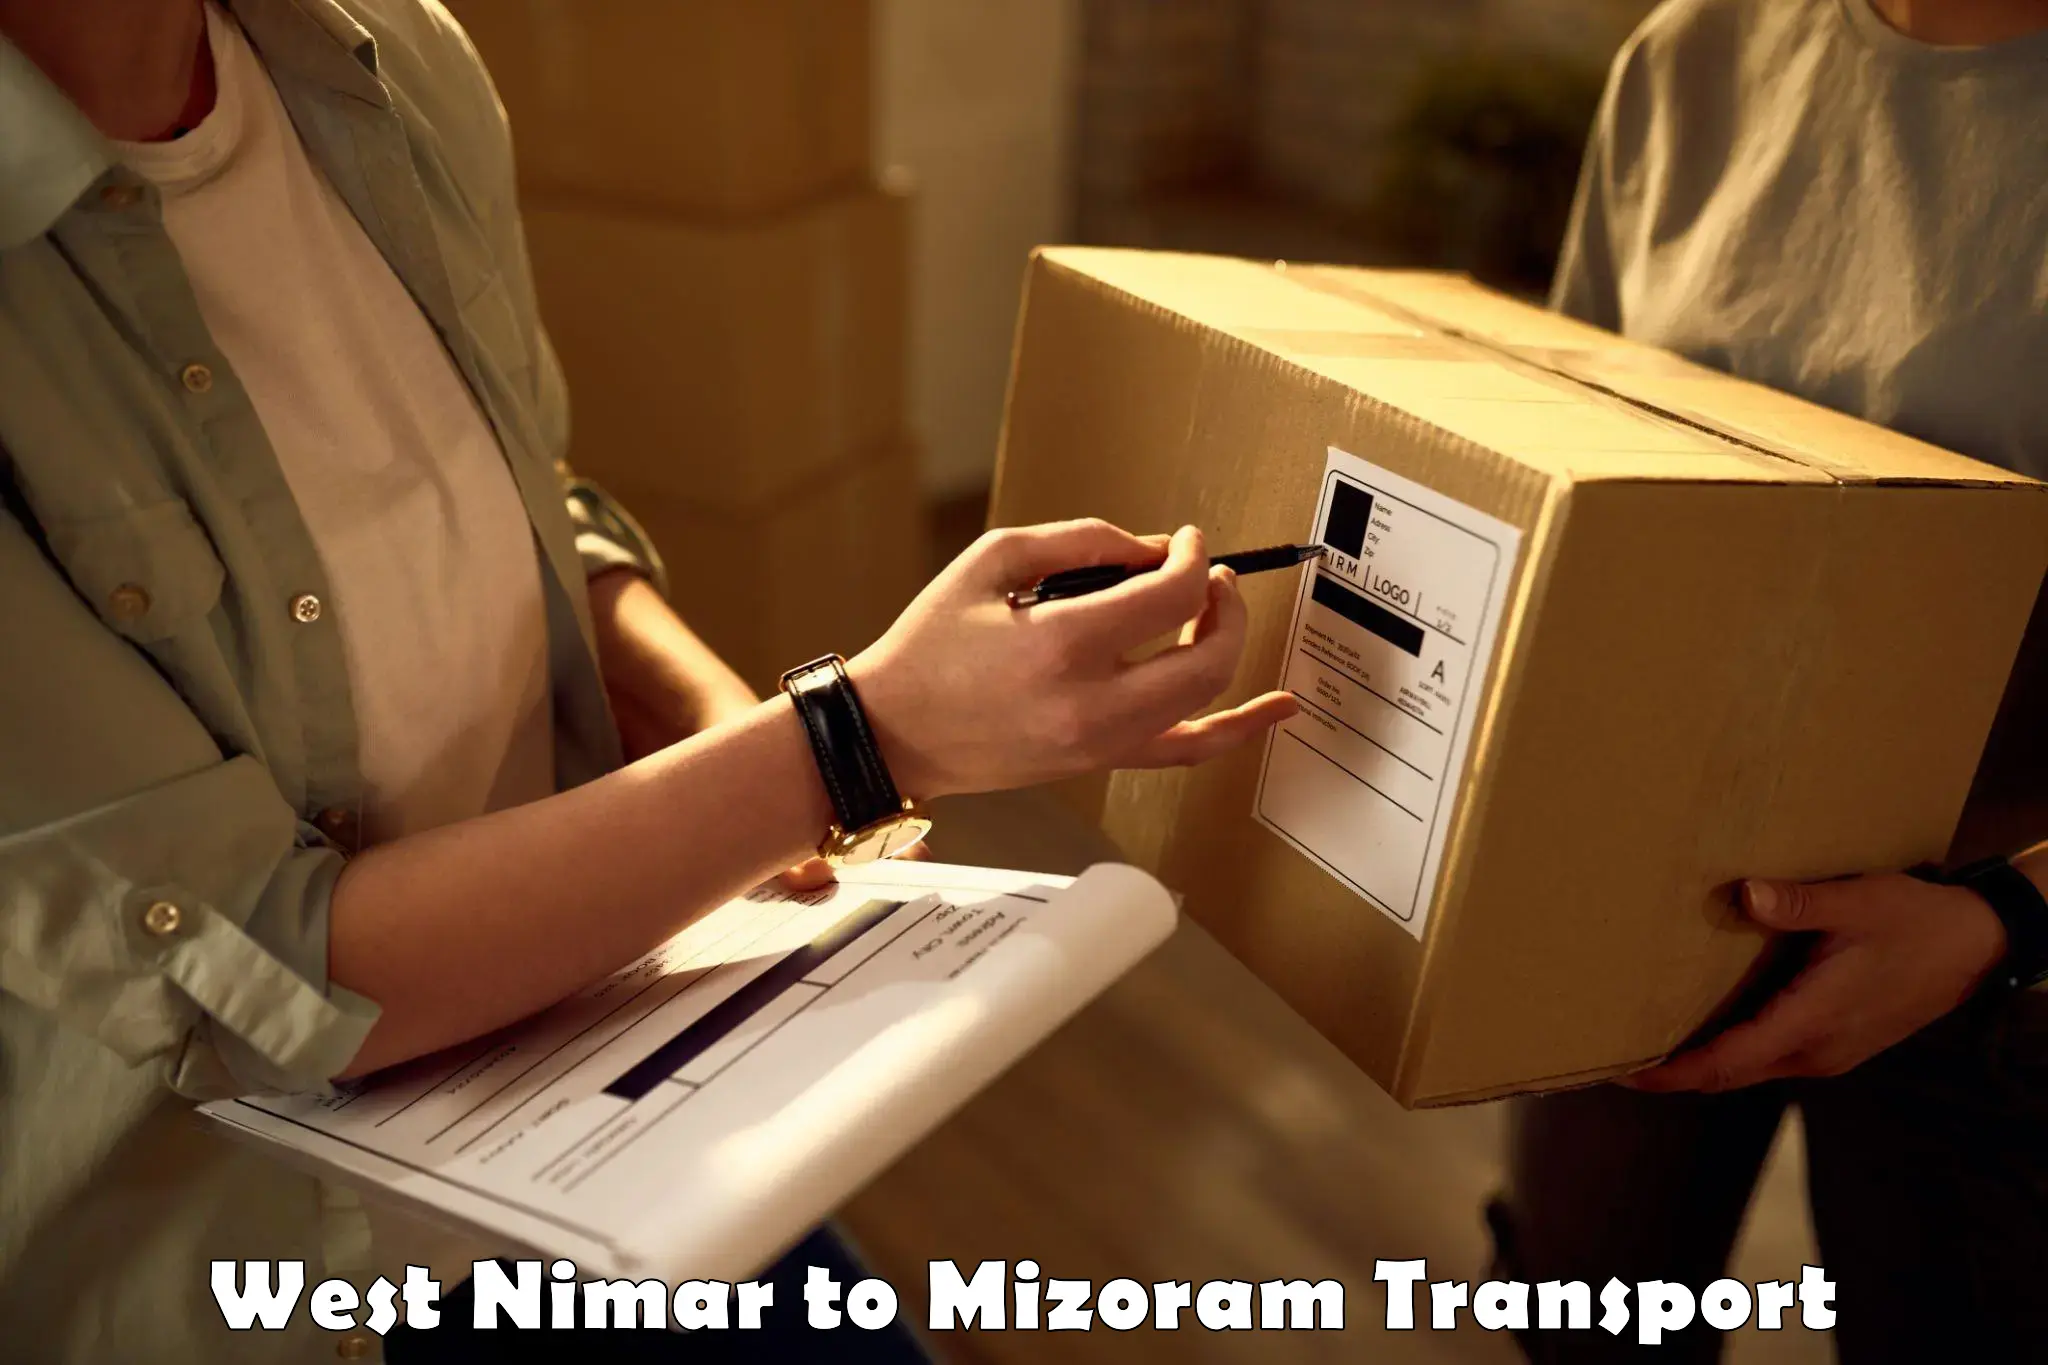 Delivery service West Nimar to Mizoram